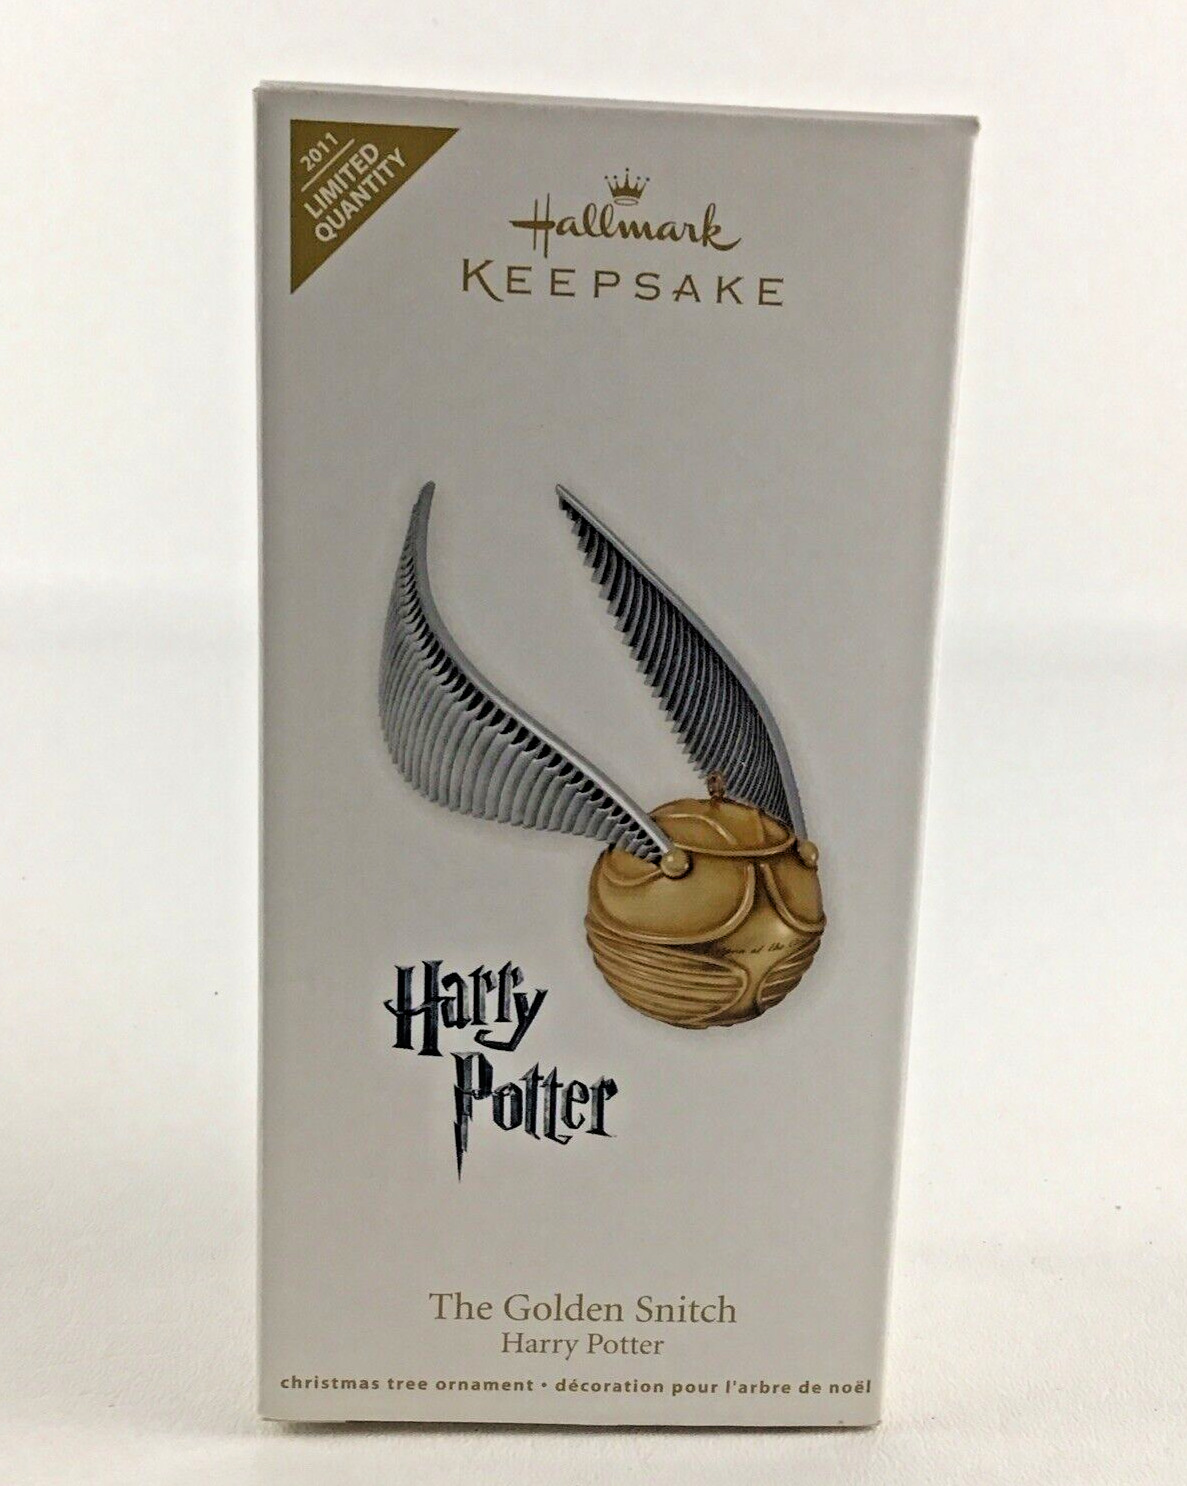 Hallmark Keepsake Christmas Ornament Harry Potter The Golden Snitch LE New 2011